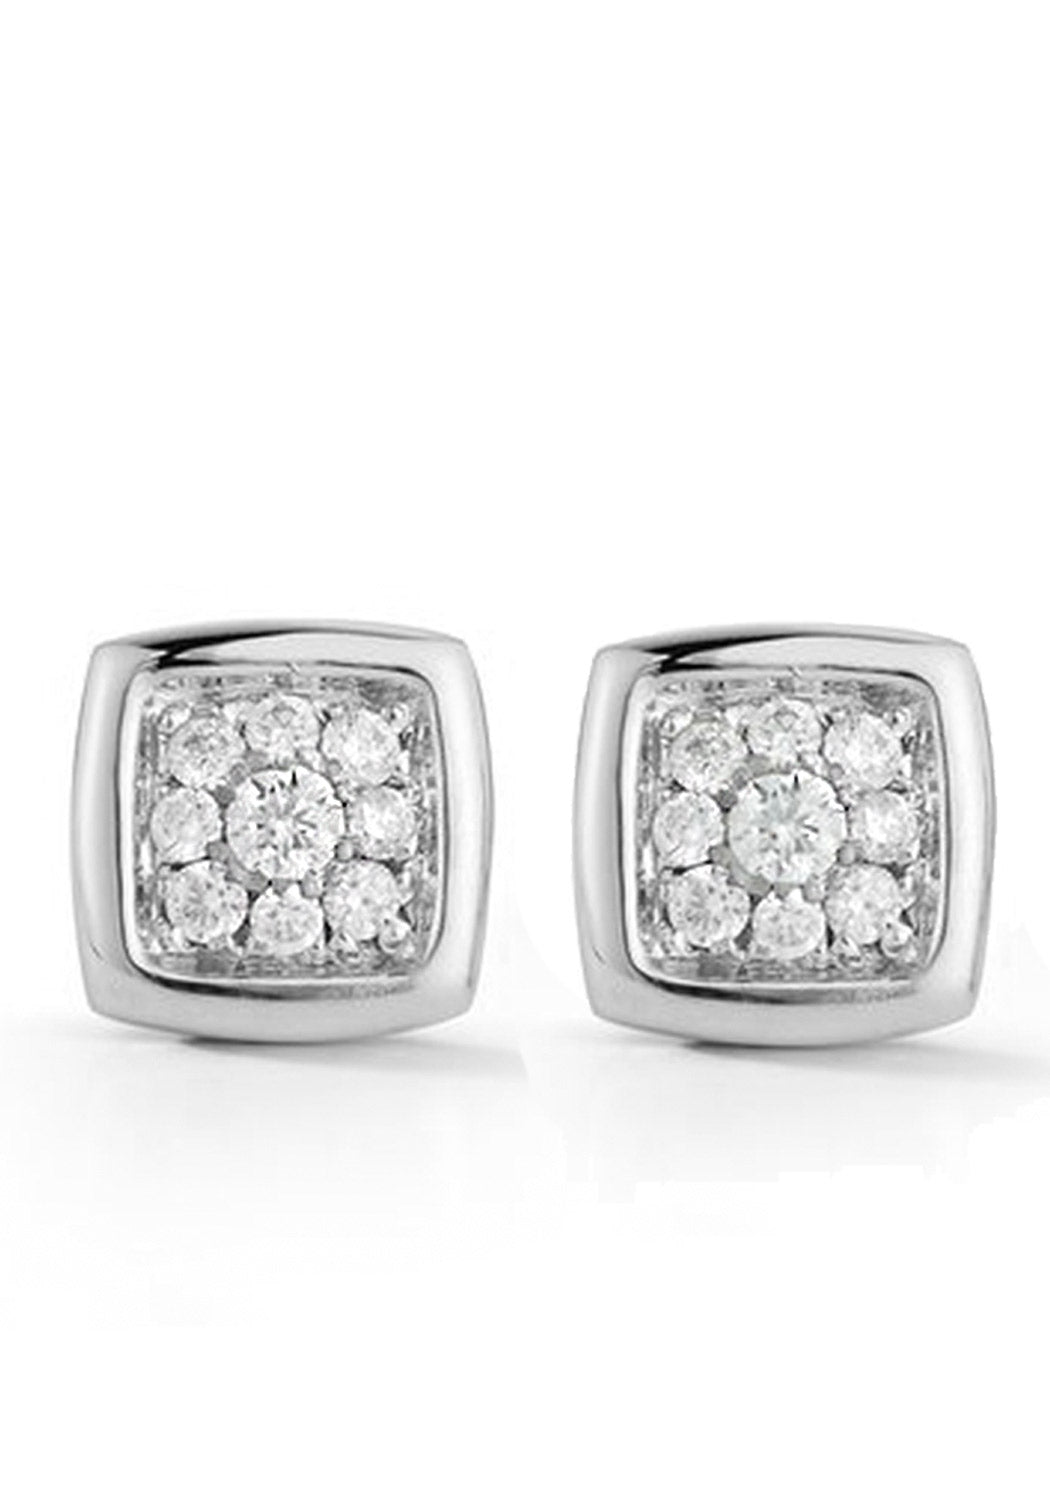 A & Furst Gaia 18K White Gold Diamond Stud Earrings | OsterJewelers.com